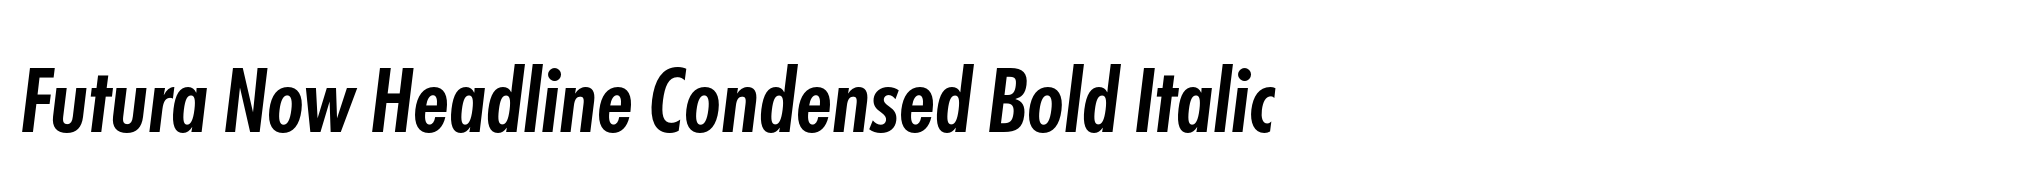 Futura Now Headline Condensed Bold Italic image